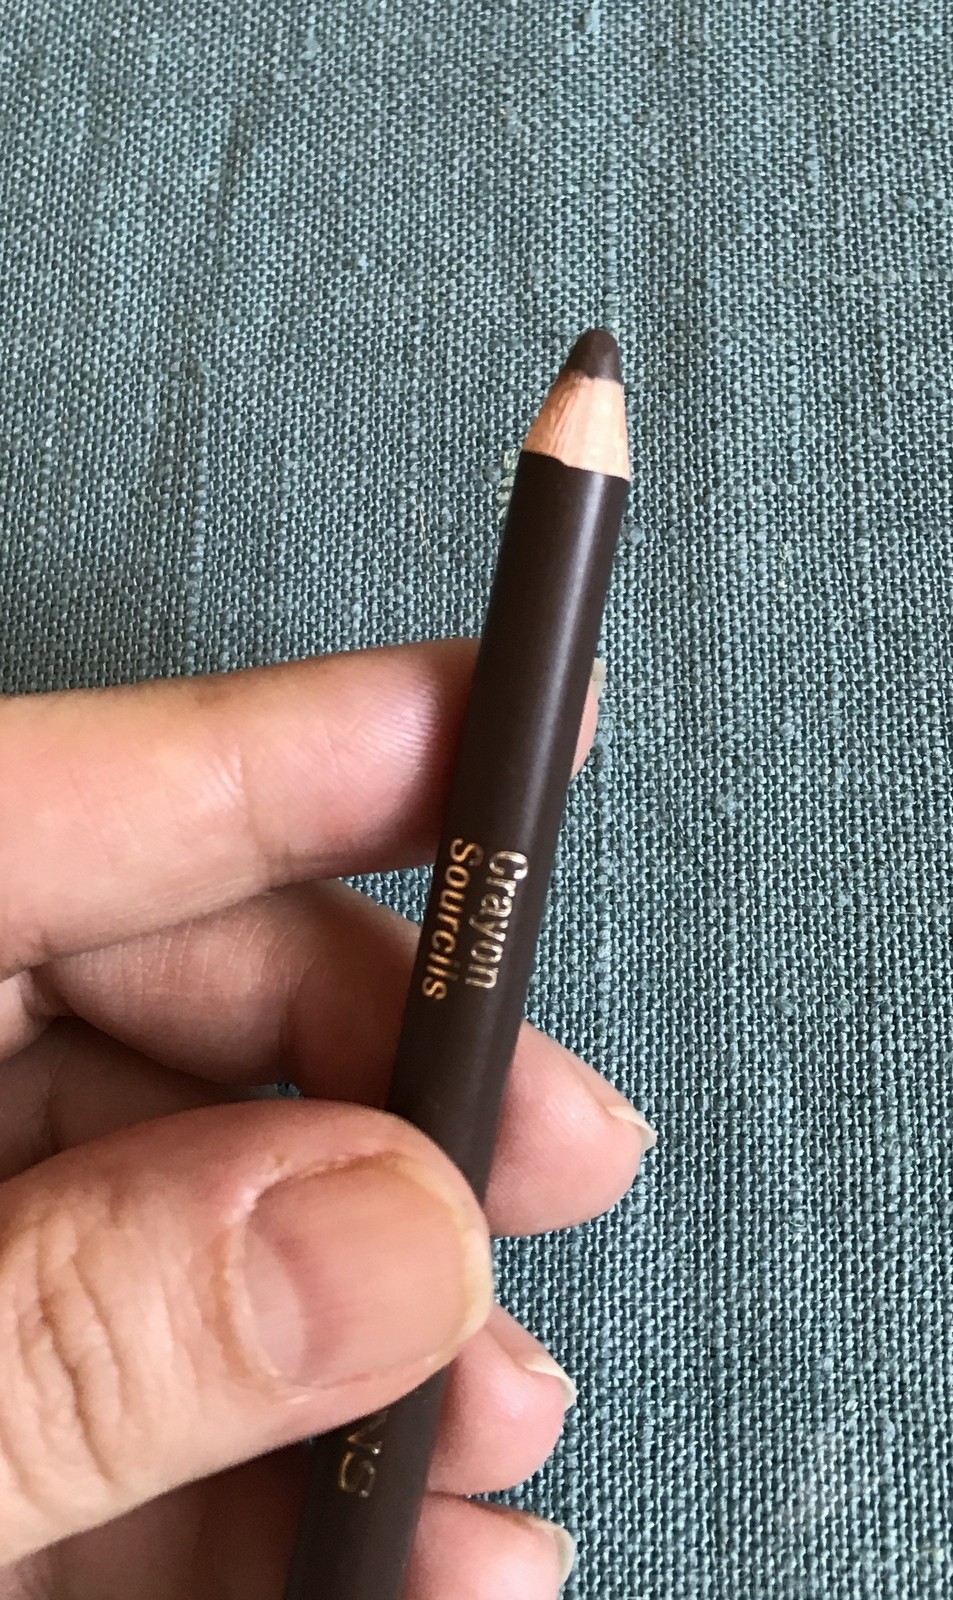 Clarins карандаш для бровей crayon sourcils 03 soft blonde отзывы